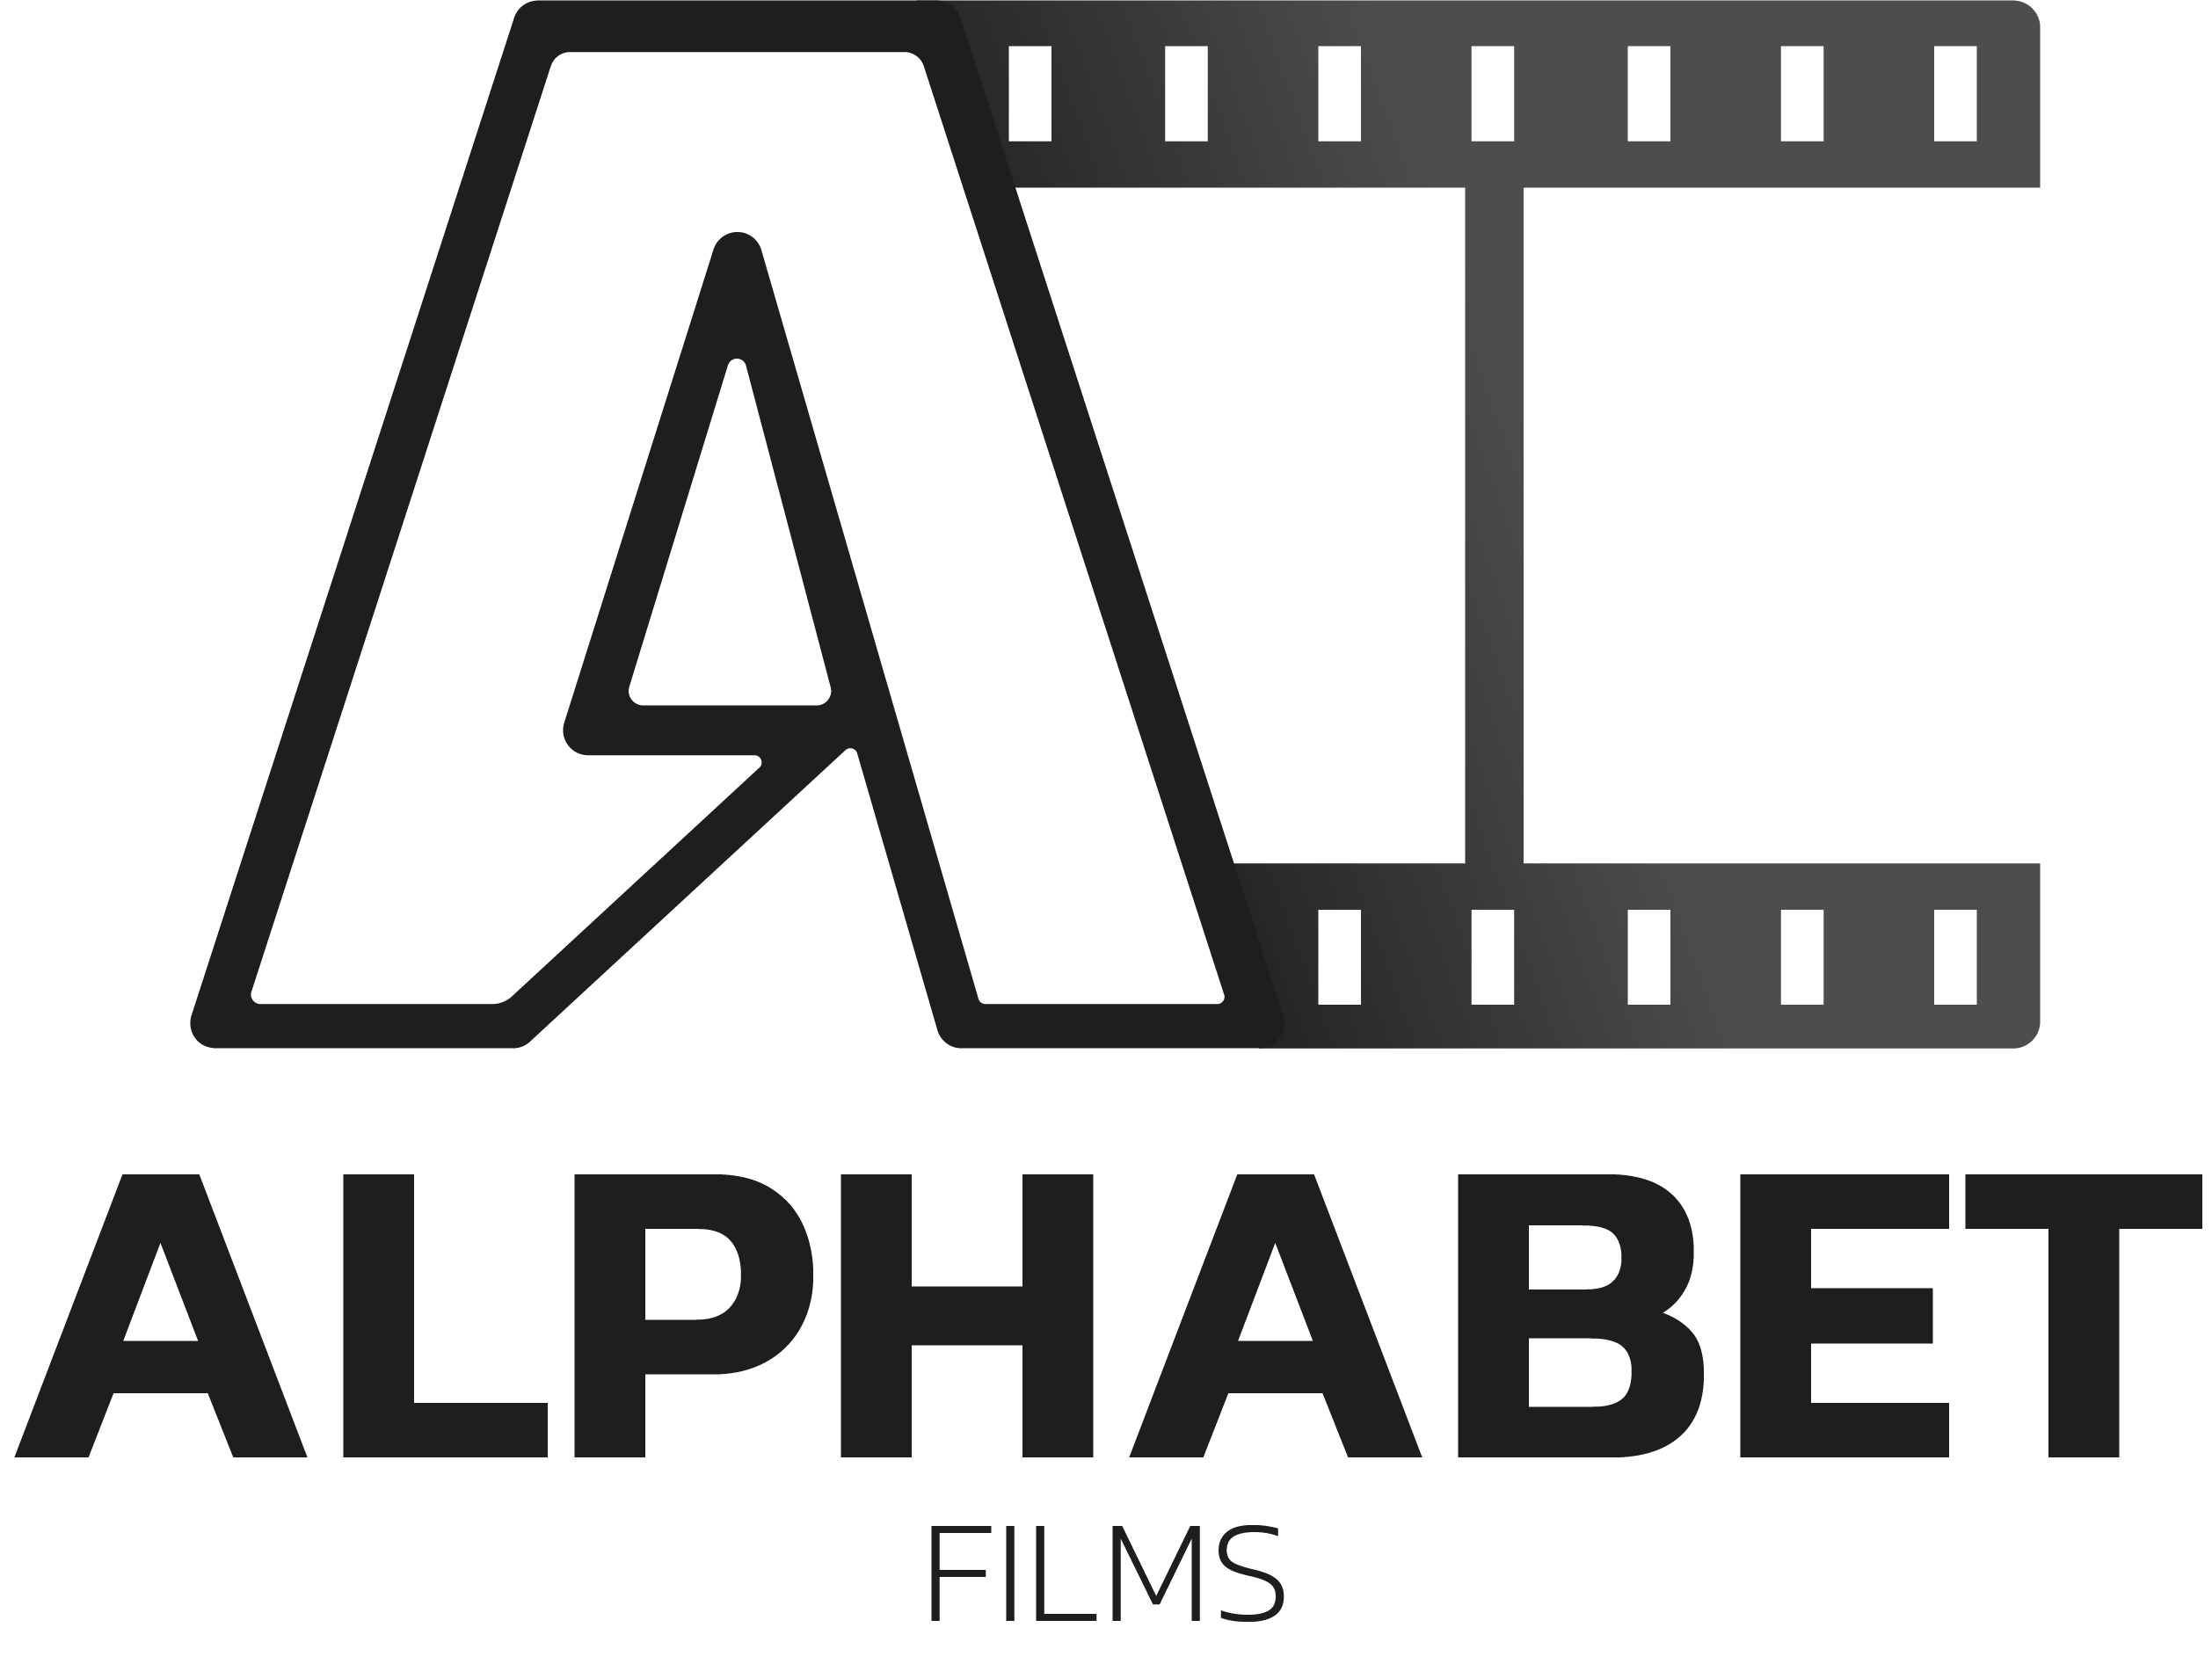 Alphabet Films